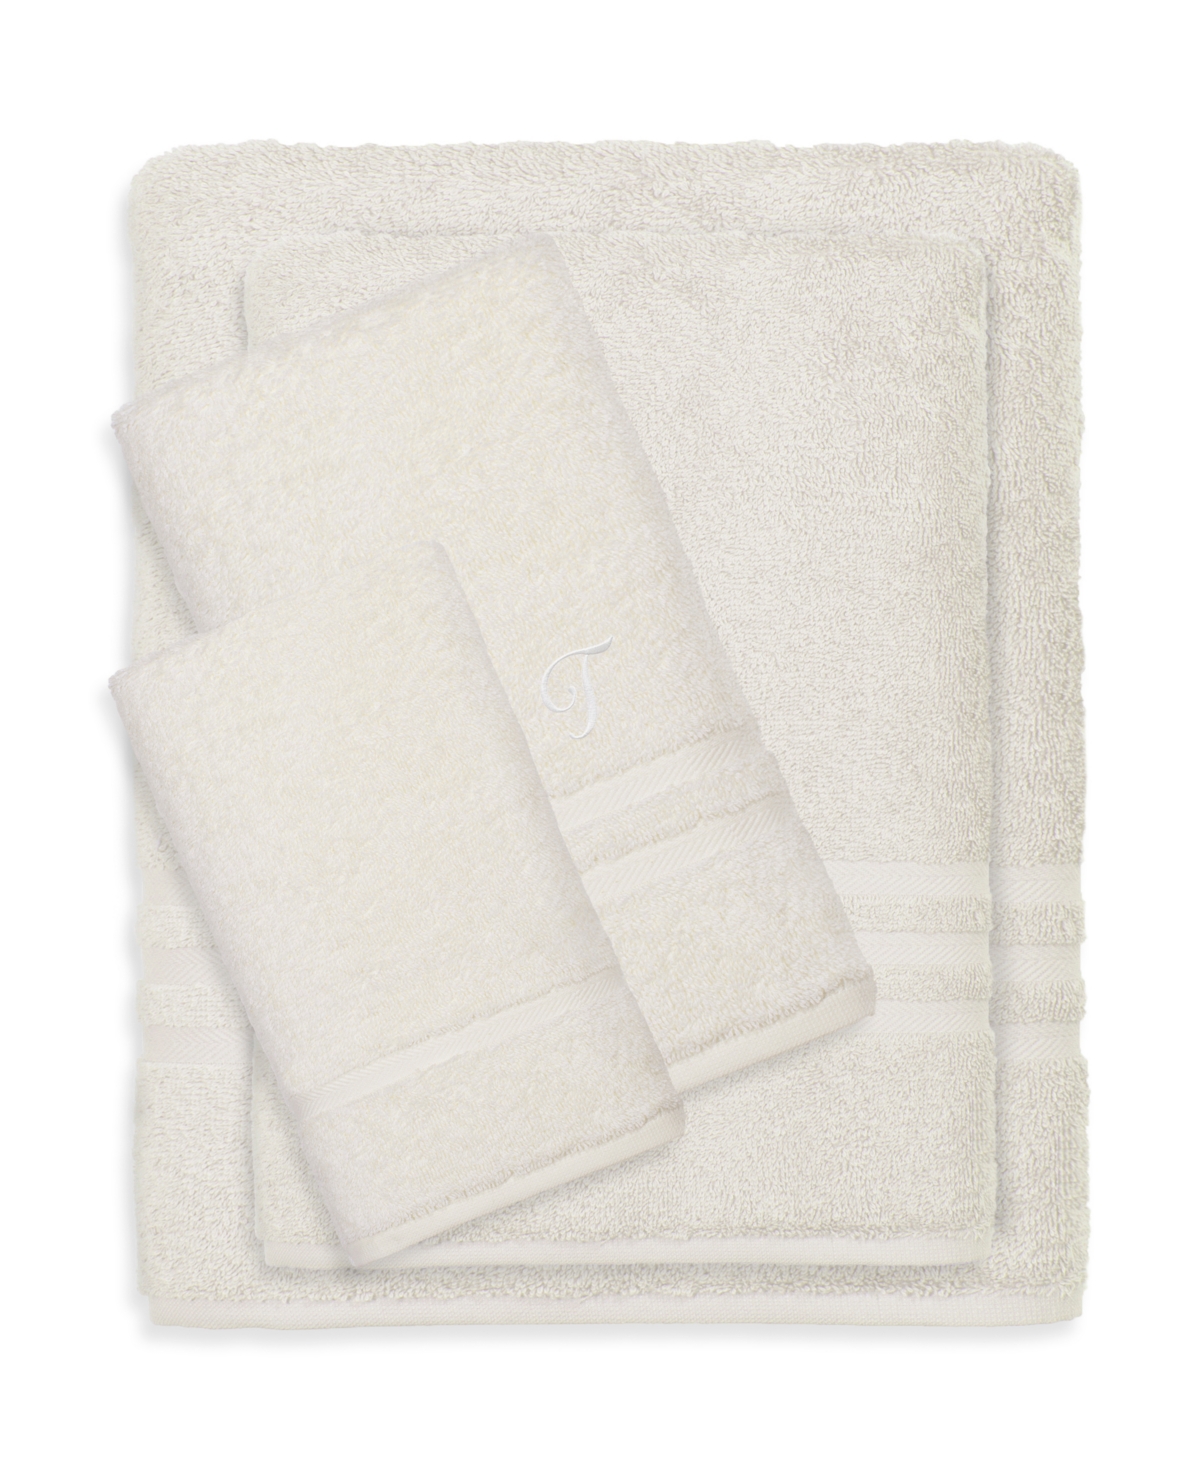 Linum Home Textiles Turkish Cotton Personalized Denzi Towel Set, 4 Piece Bedding In Tan,beige